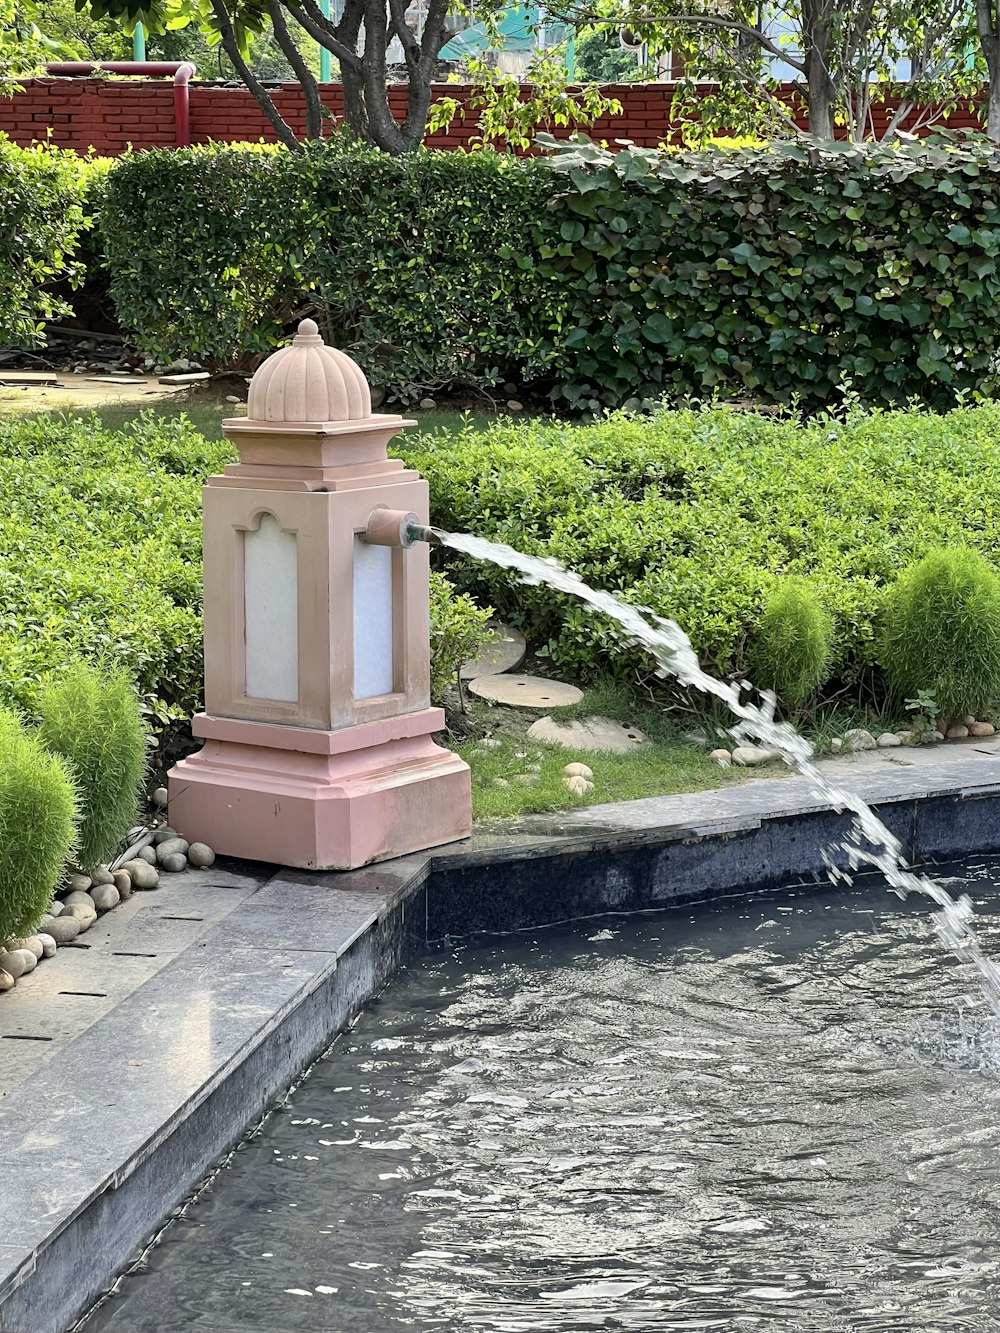 a water fountain in a garden